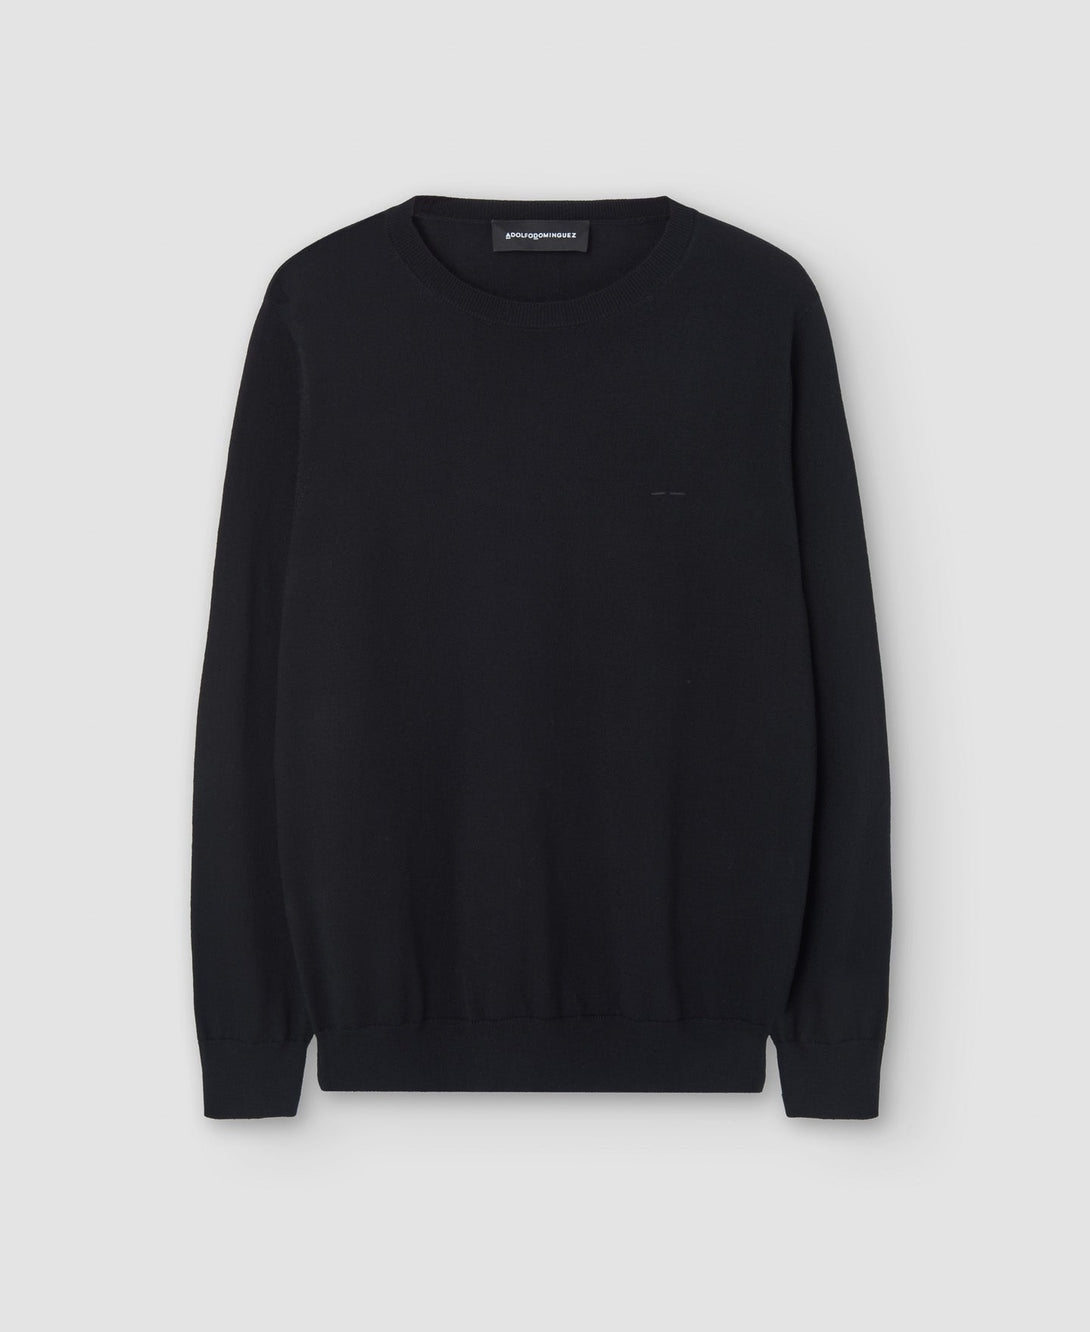 Men Jersey | Black Merino Wool Crew Neck Sweater by Spanish designer Adolfo Dominguez